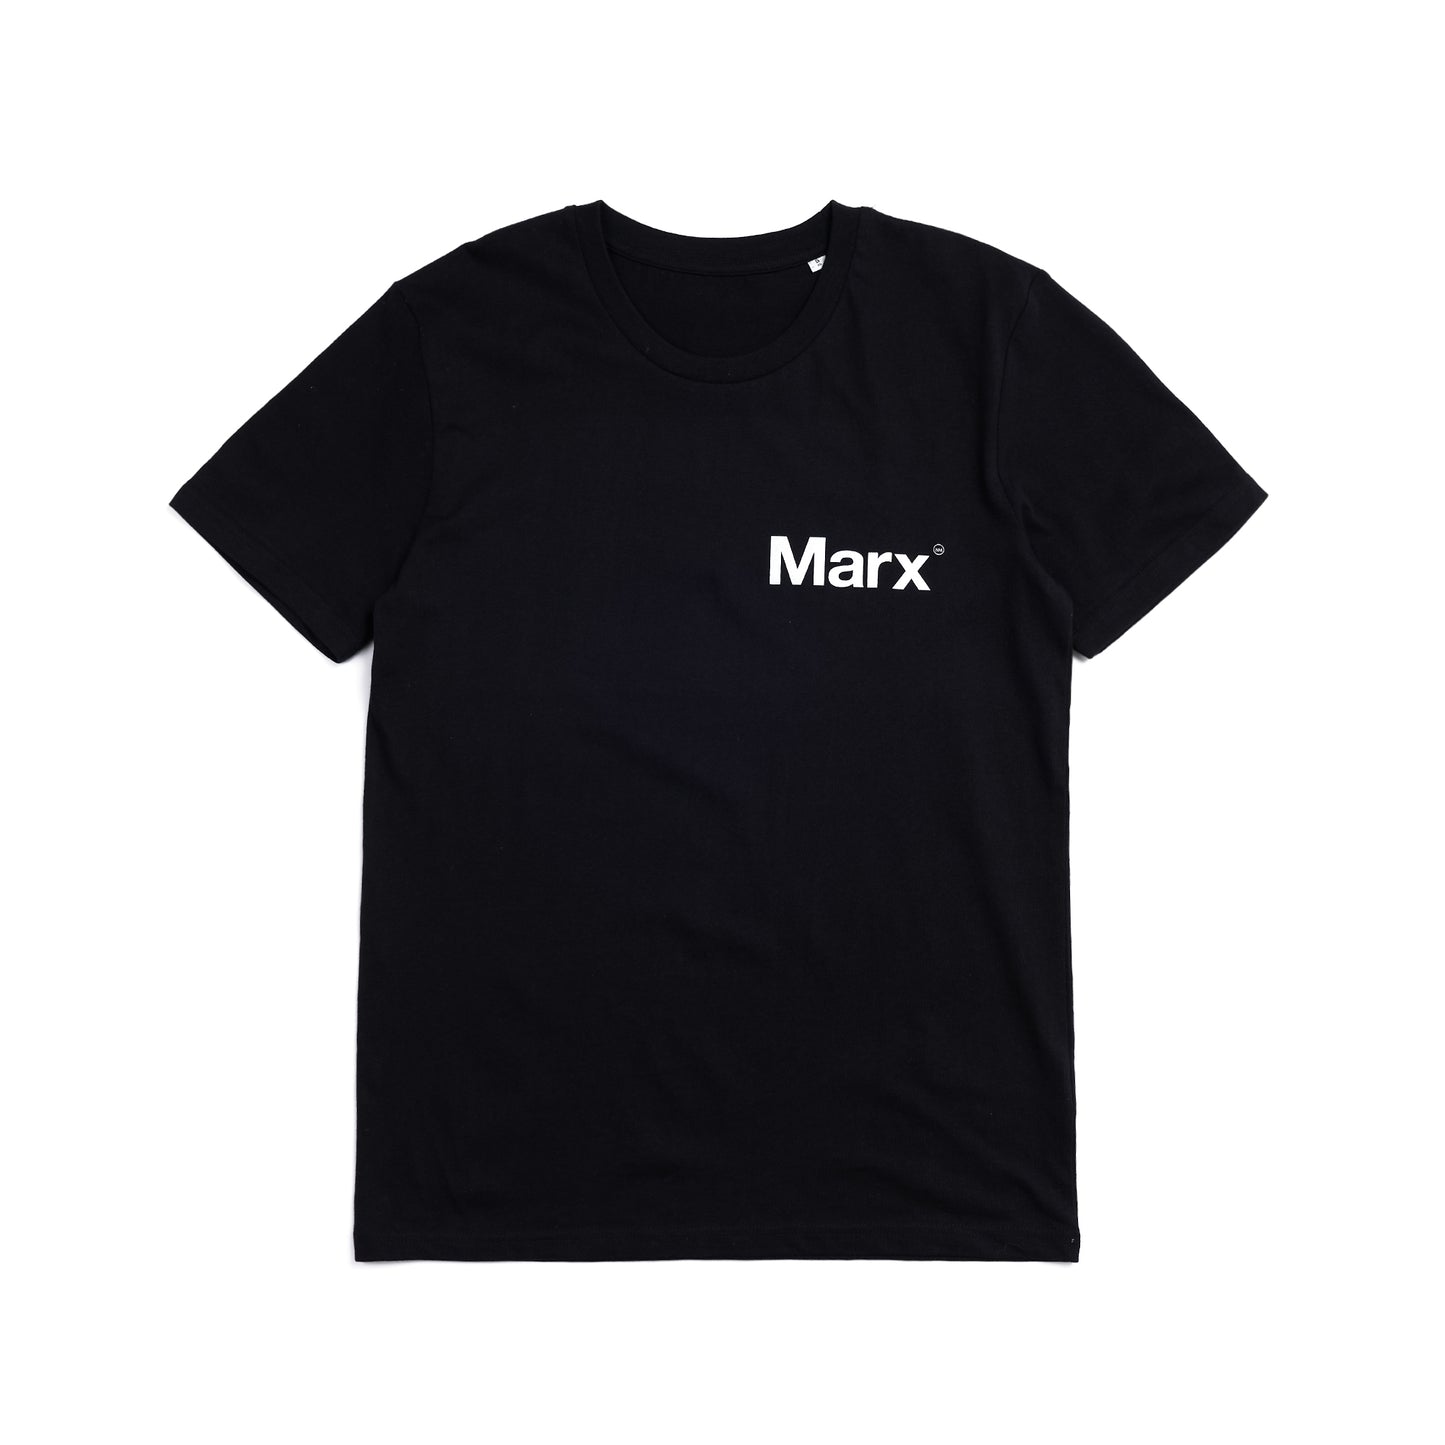 Marx Short Sleeve Black